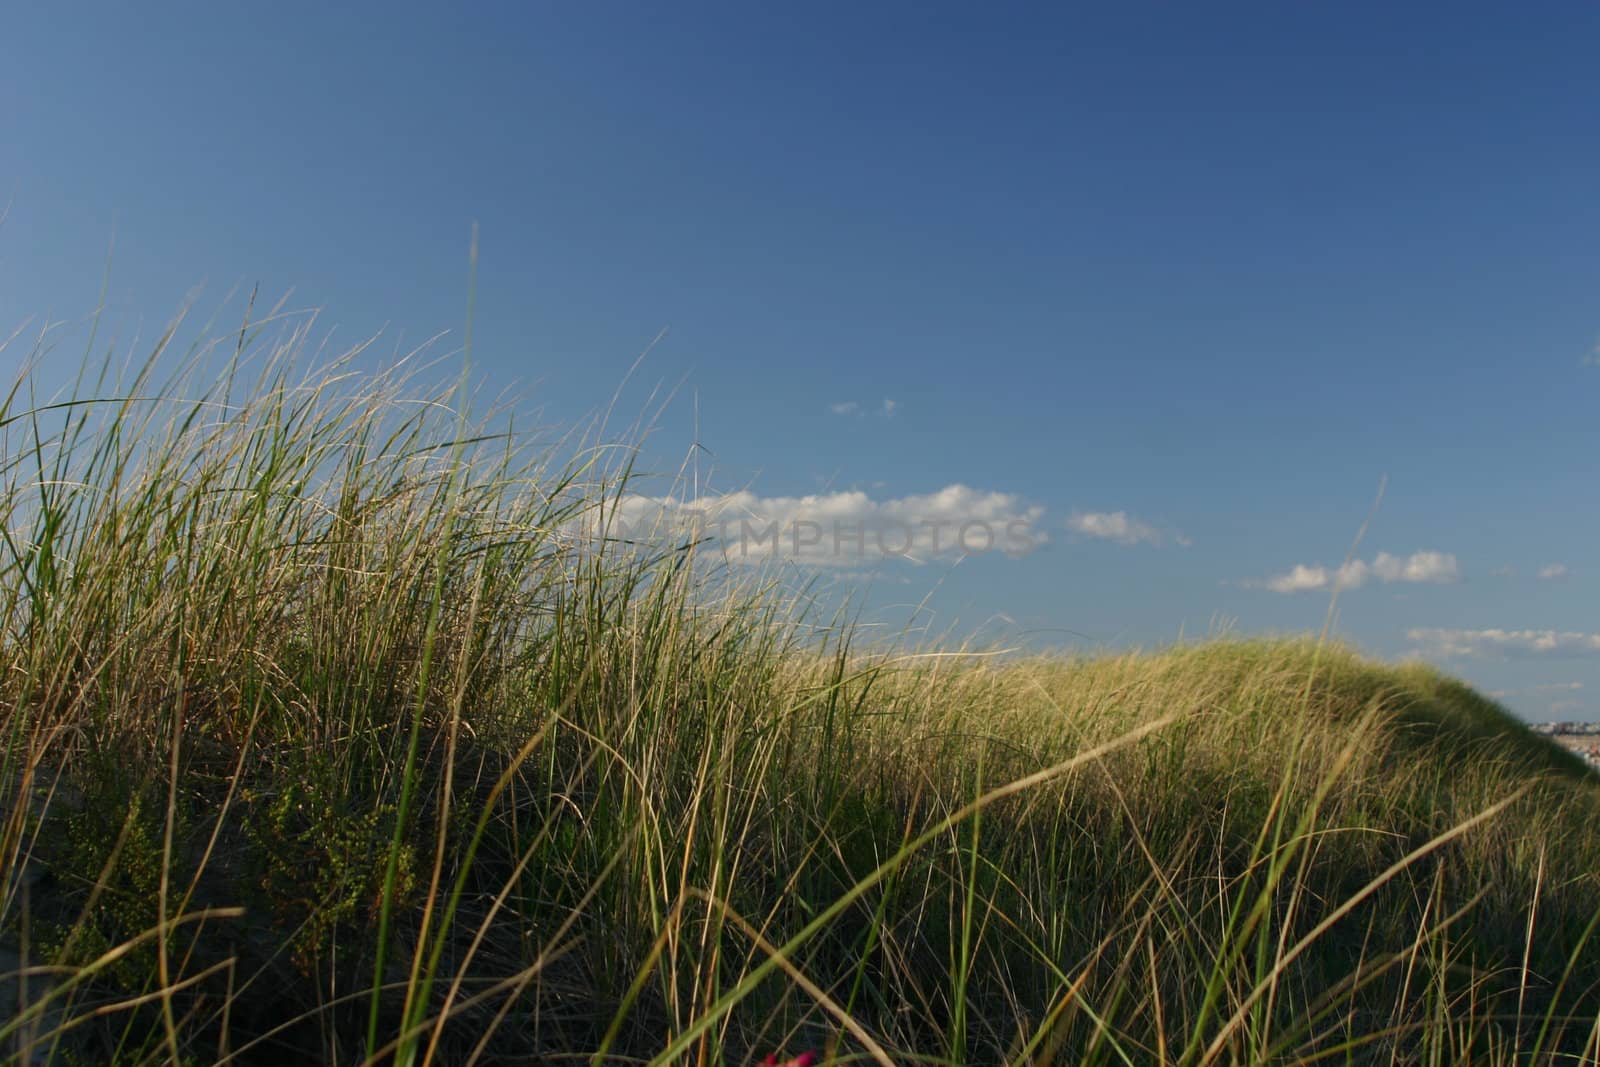 Sea Grass dunes set against a deep blue sky on the Maine Coast